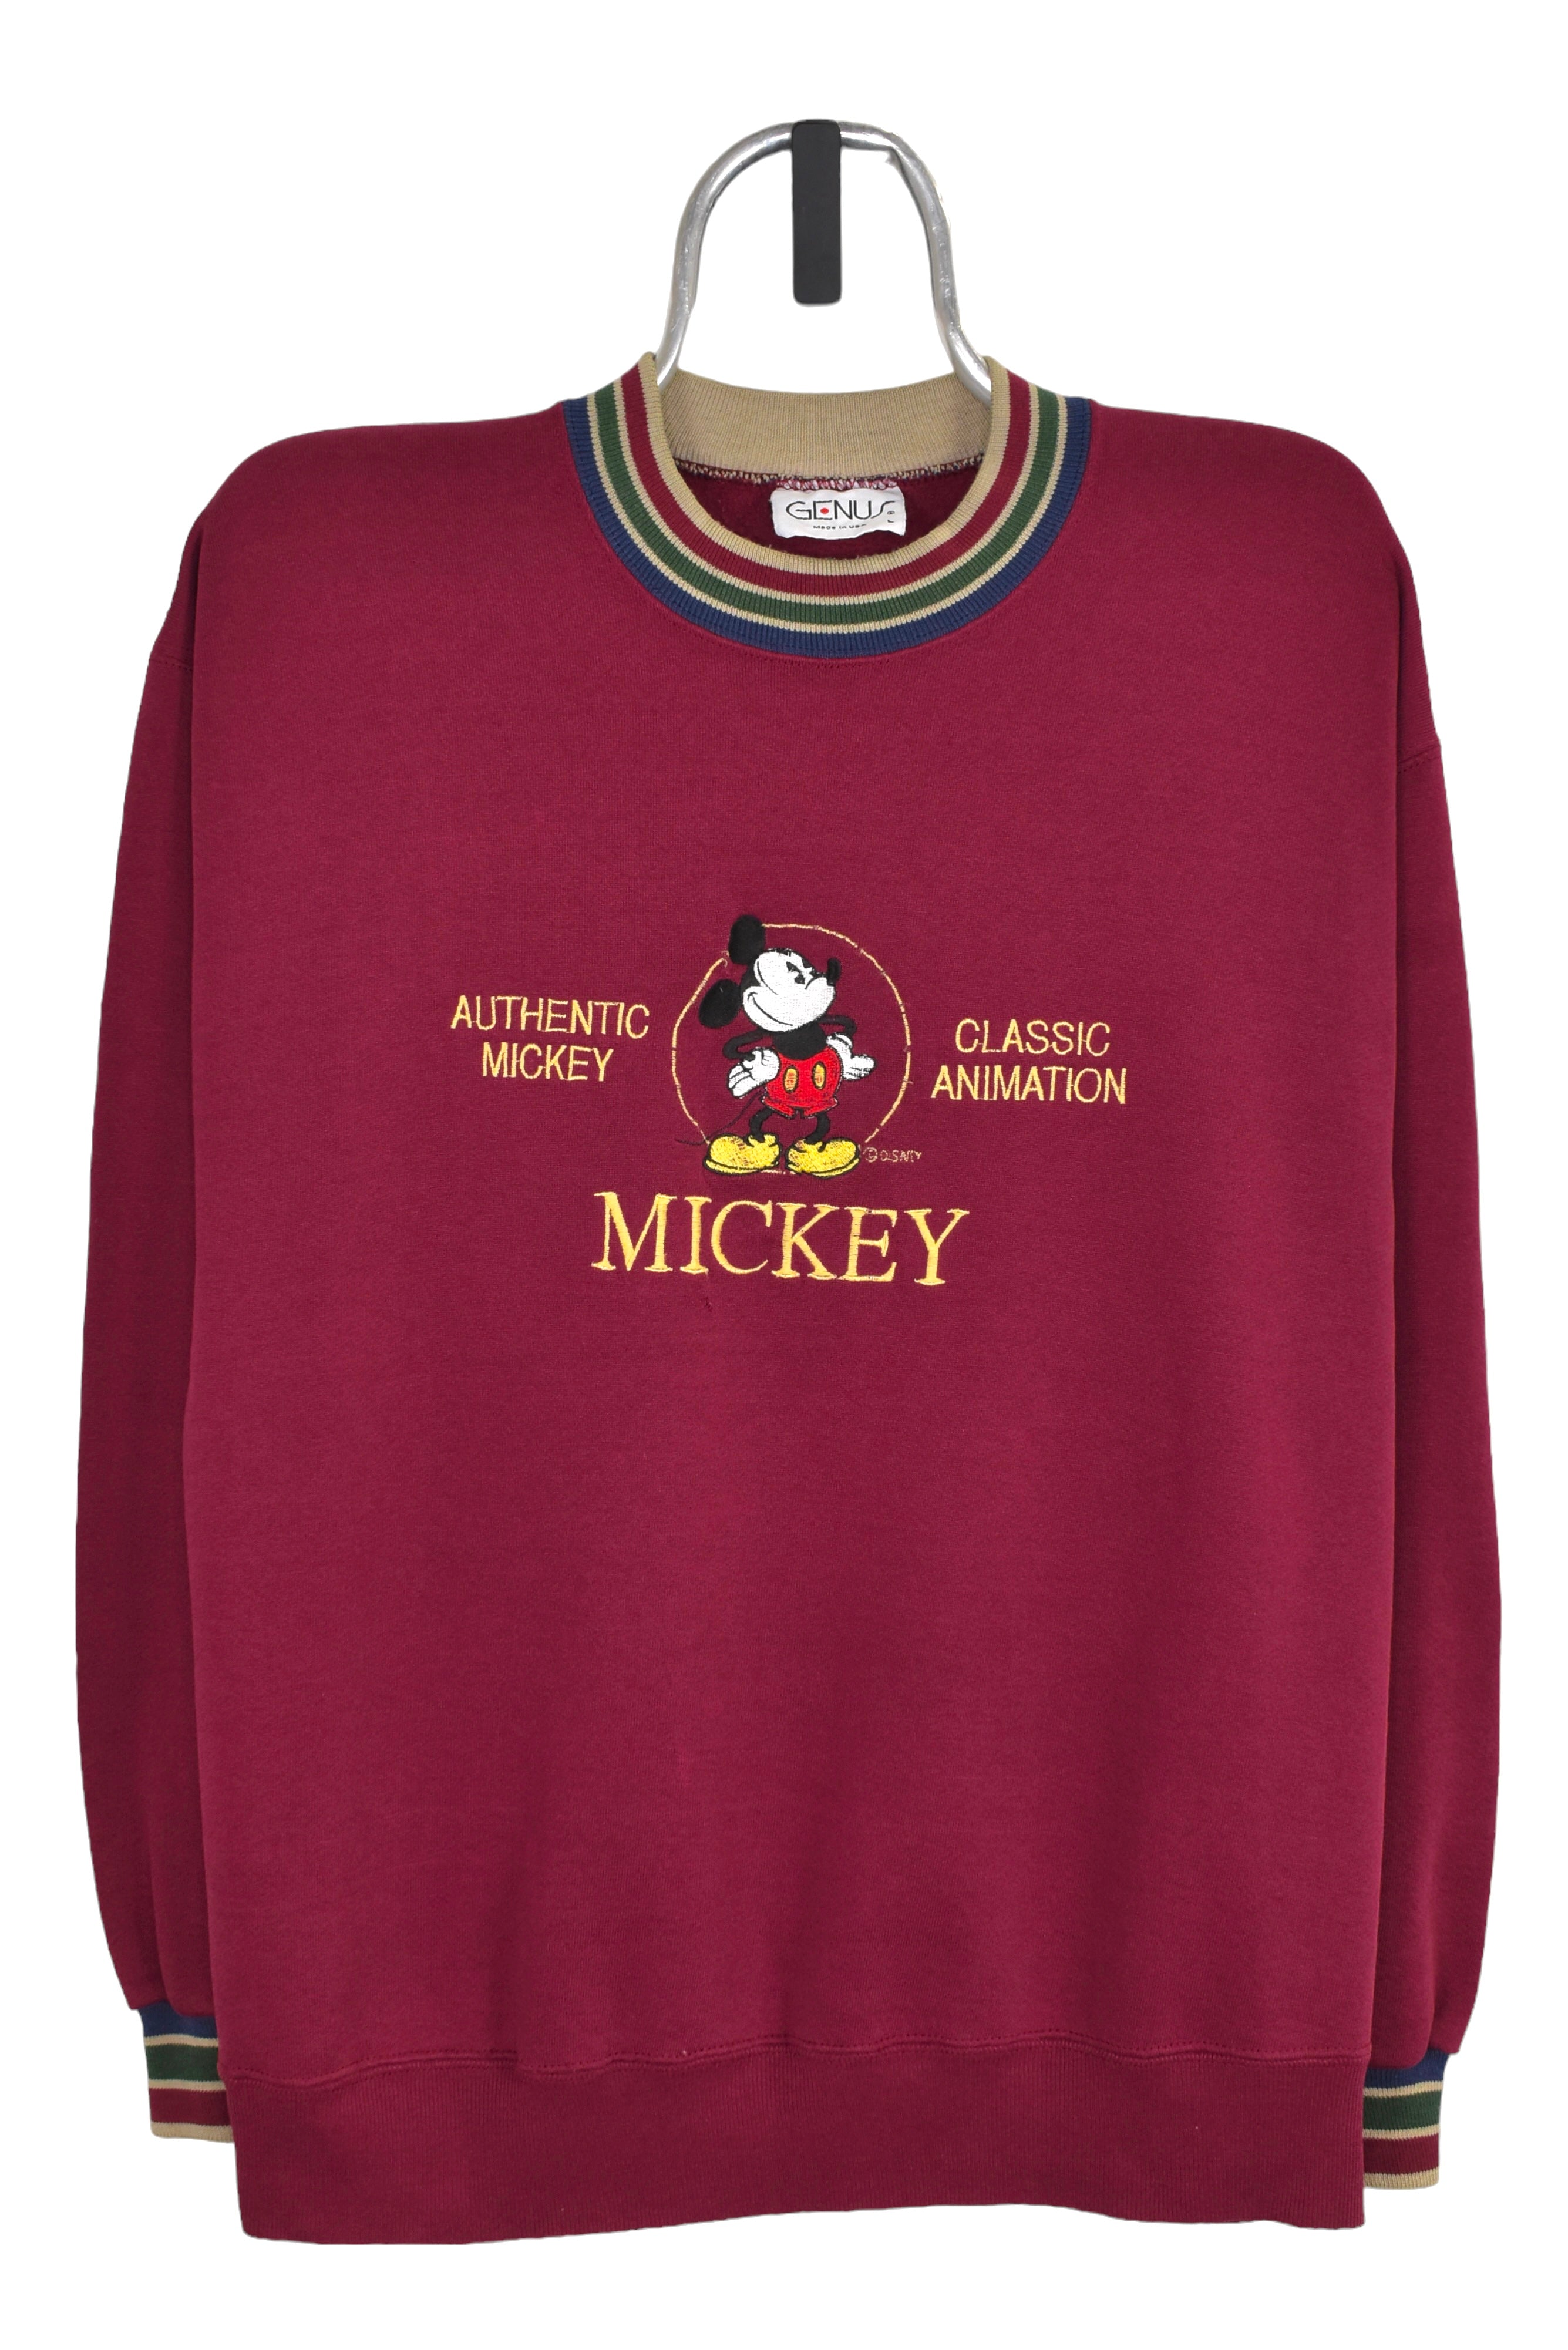 Vintage Mickey Mouse sweatshirt Large, Disney embroidered crewneck